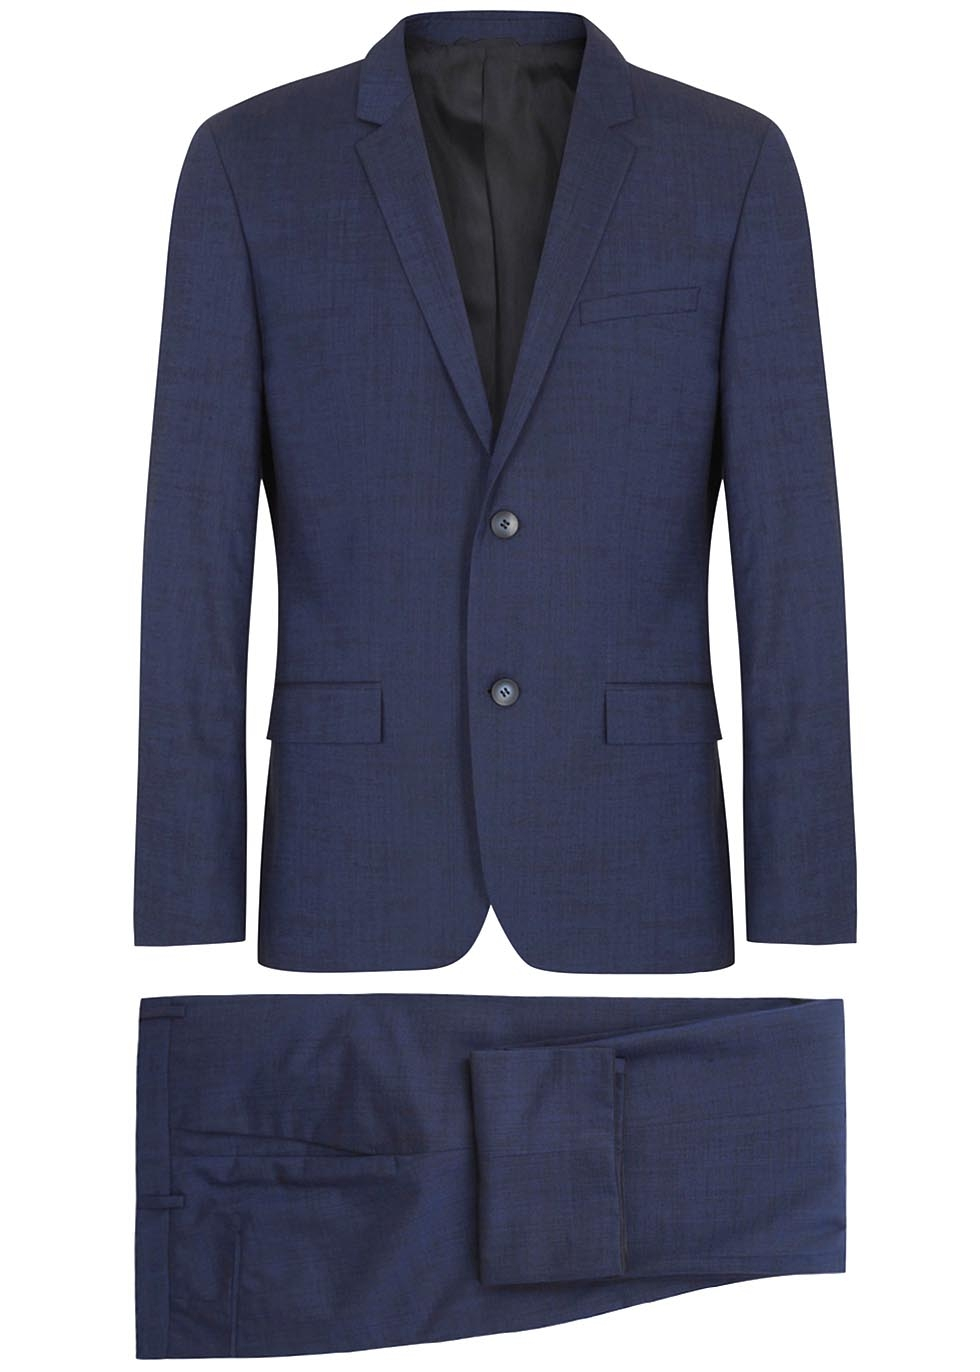 Calvin Klein Tate Paris Navy Wool Blend Suit in Blue for Men - Lyst